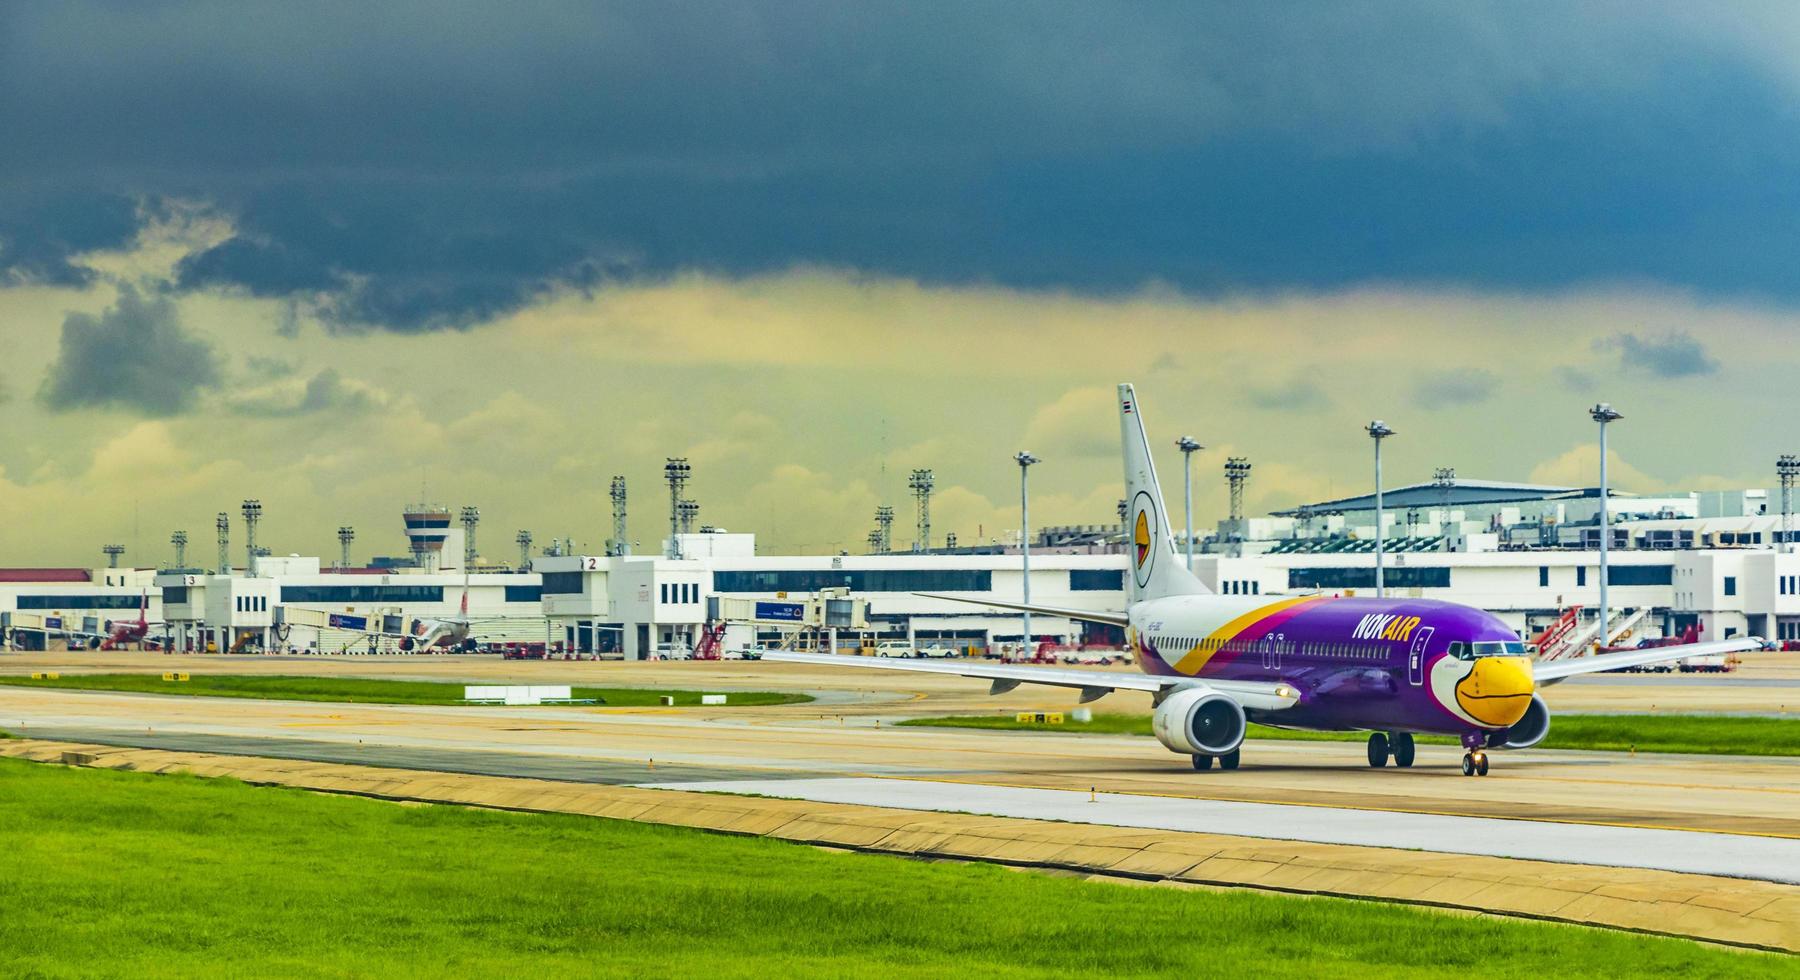 compagnia aerea nokair durante la tempesta all'aeroporto di bangkok suvarnabhumi, thailandia, 2018 foto